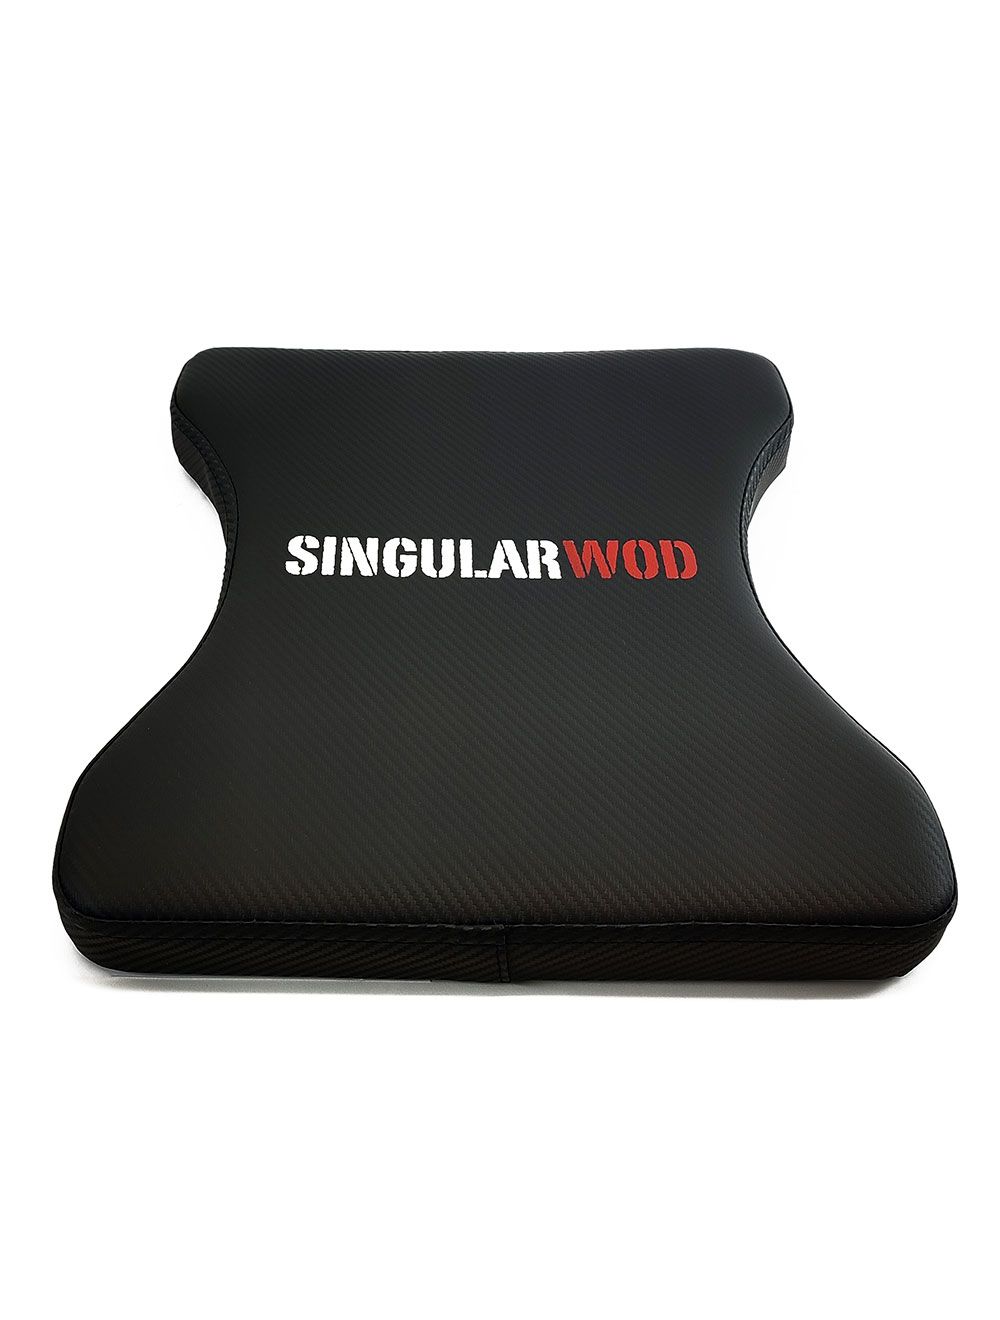 Ab-mat handastand Singular WOD - Sportech Fitness